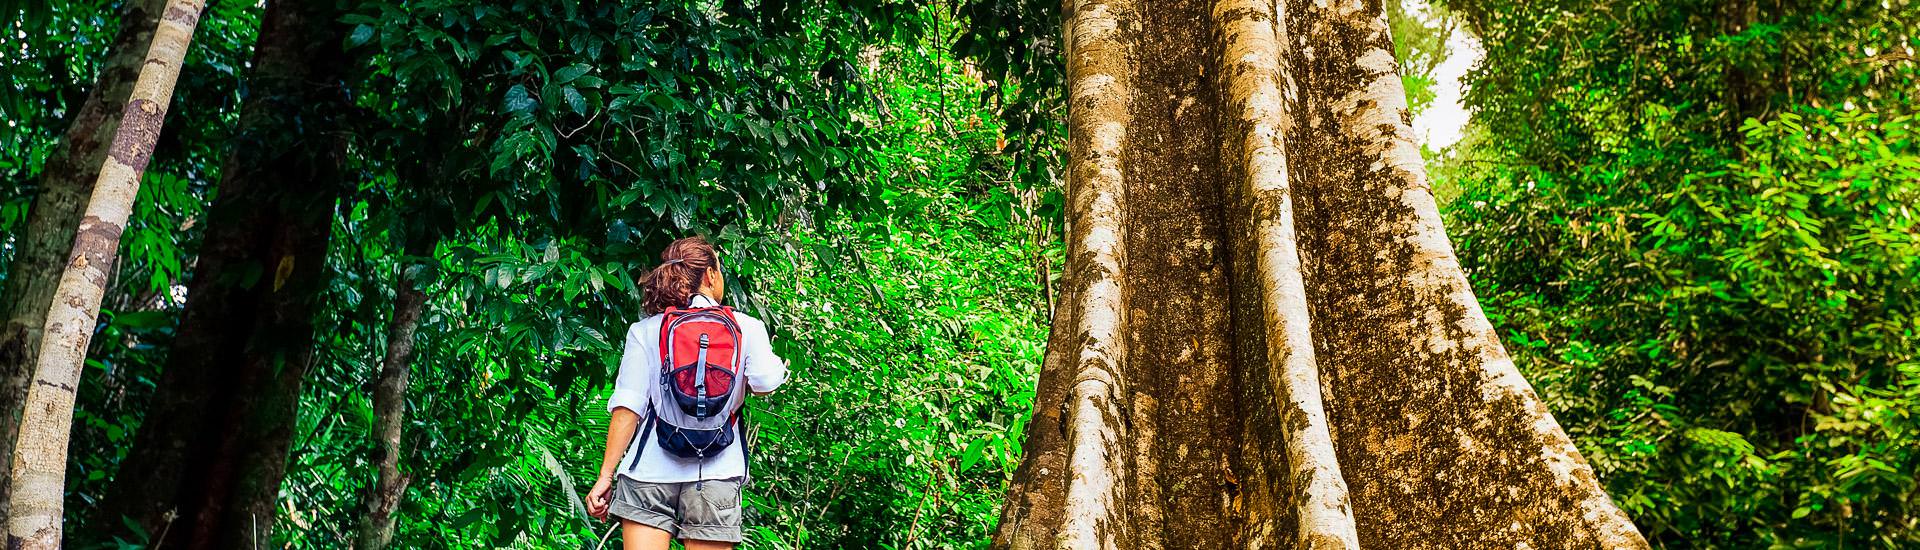 Frau beim Trekking im Regenwald |  Fred Froese, iStockphoto.com / Chamleon